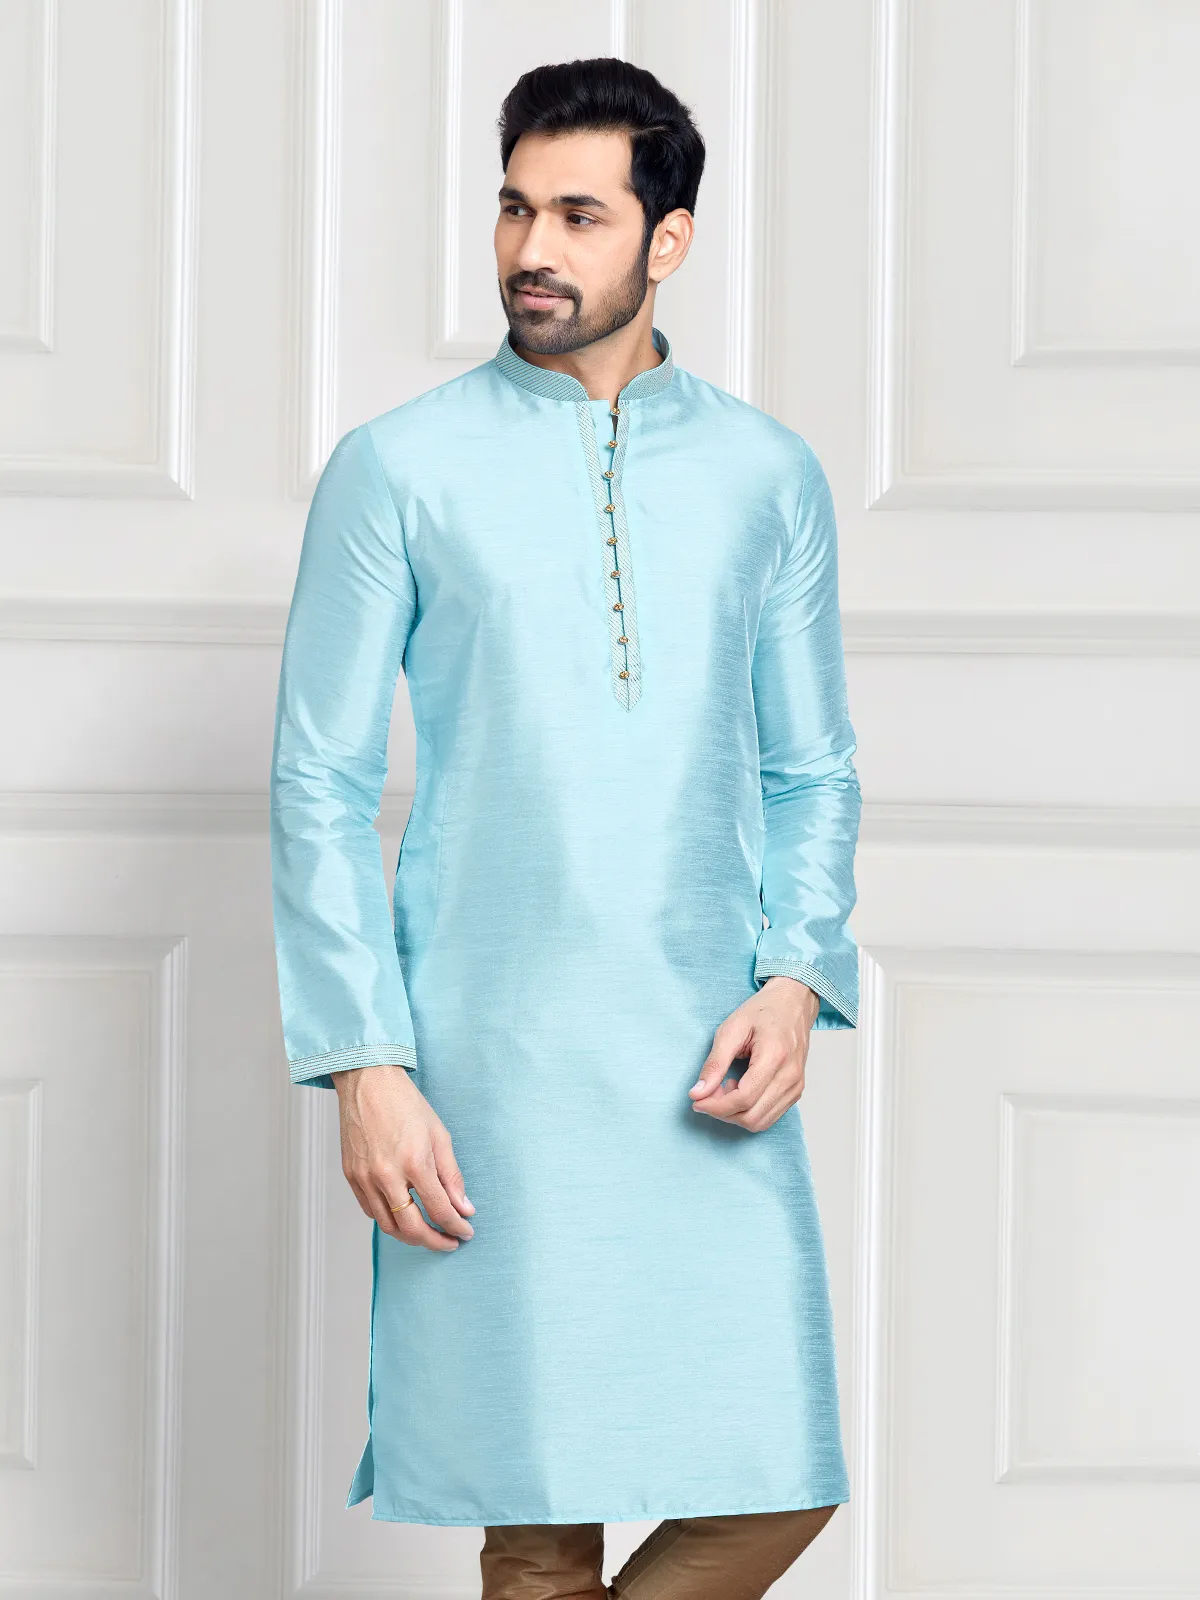 Plain sky blue cotton silk kurta suit